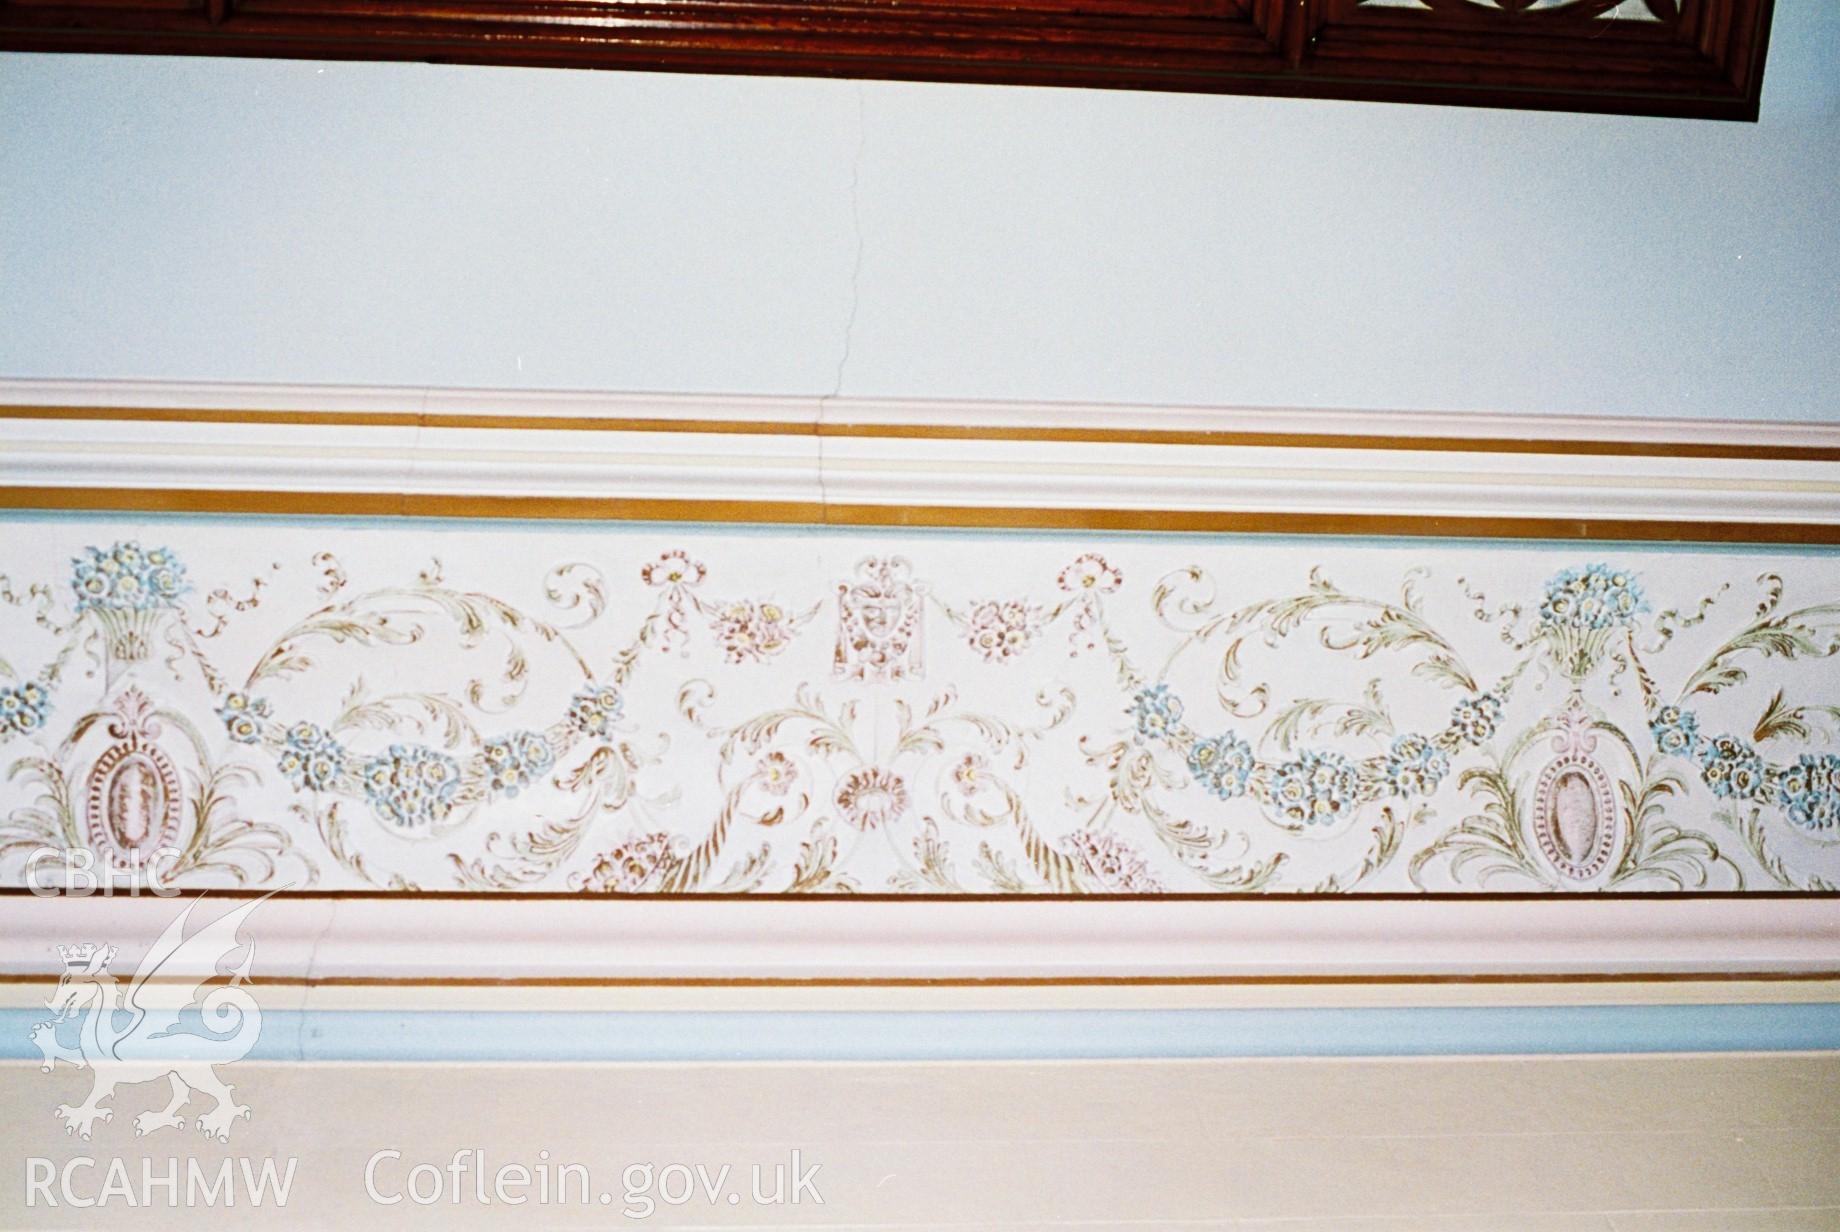 Digital colour photograph showing Salem Newydd chapel - frieze between ceiling and walls.